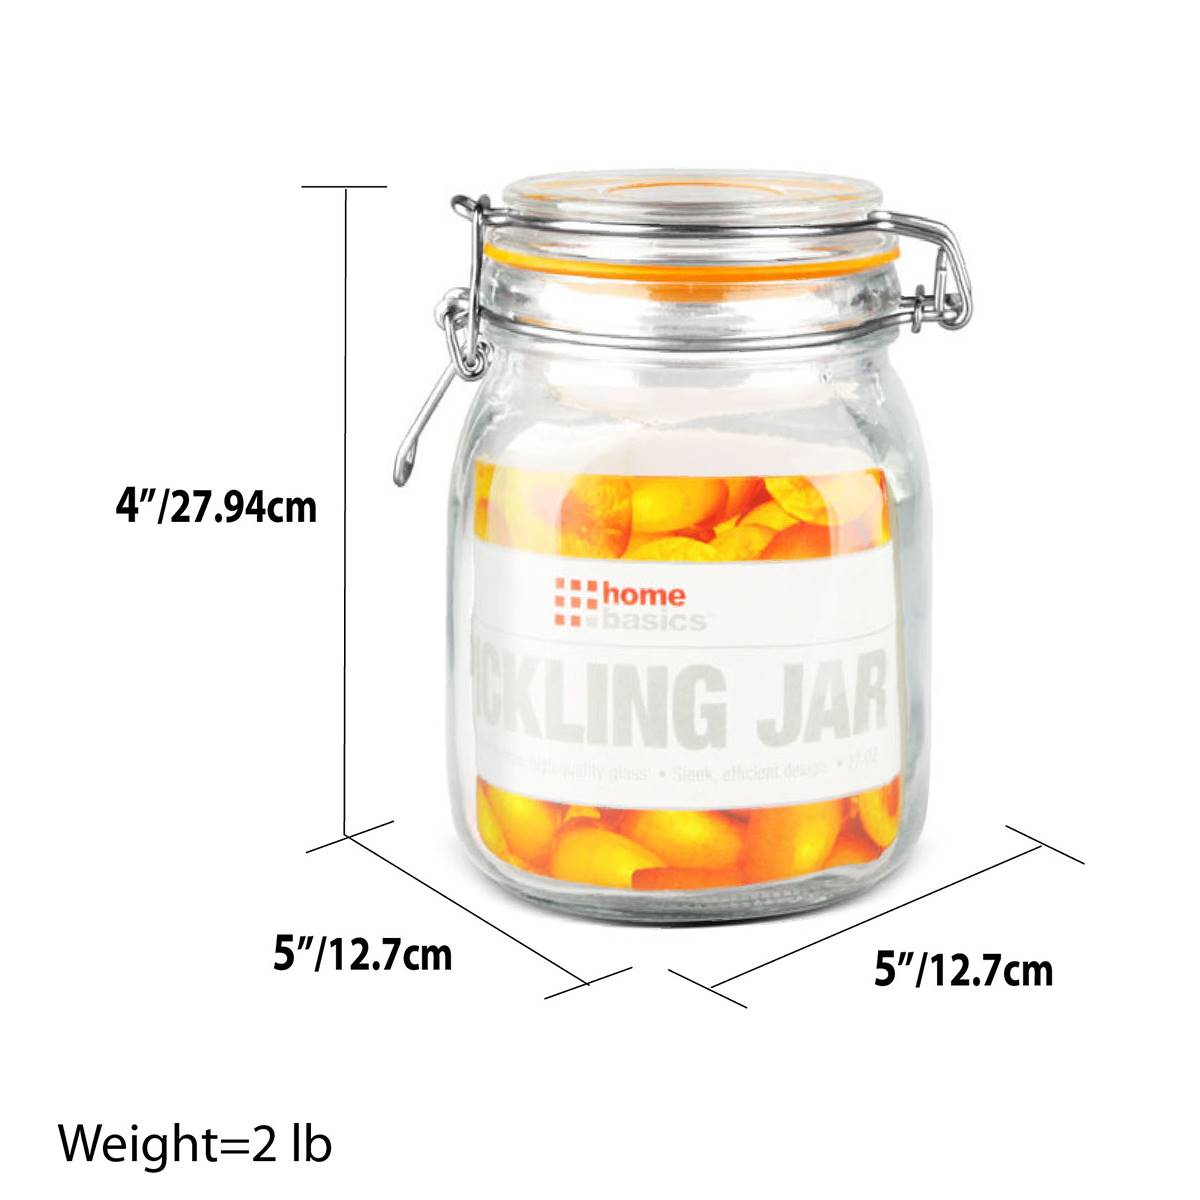 Home Basics 34oz. Glass Jar